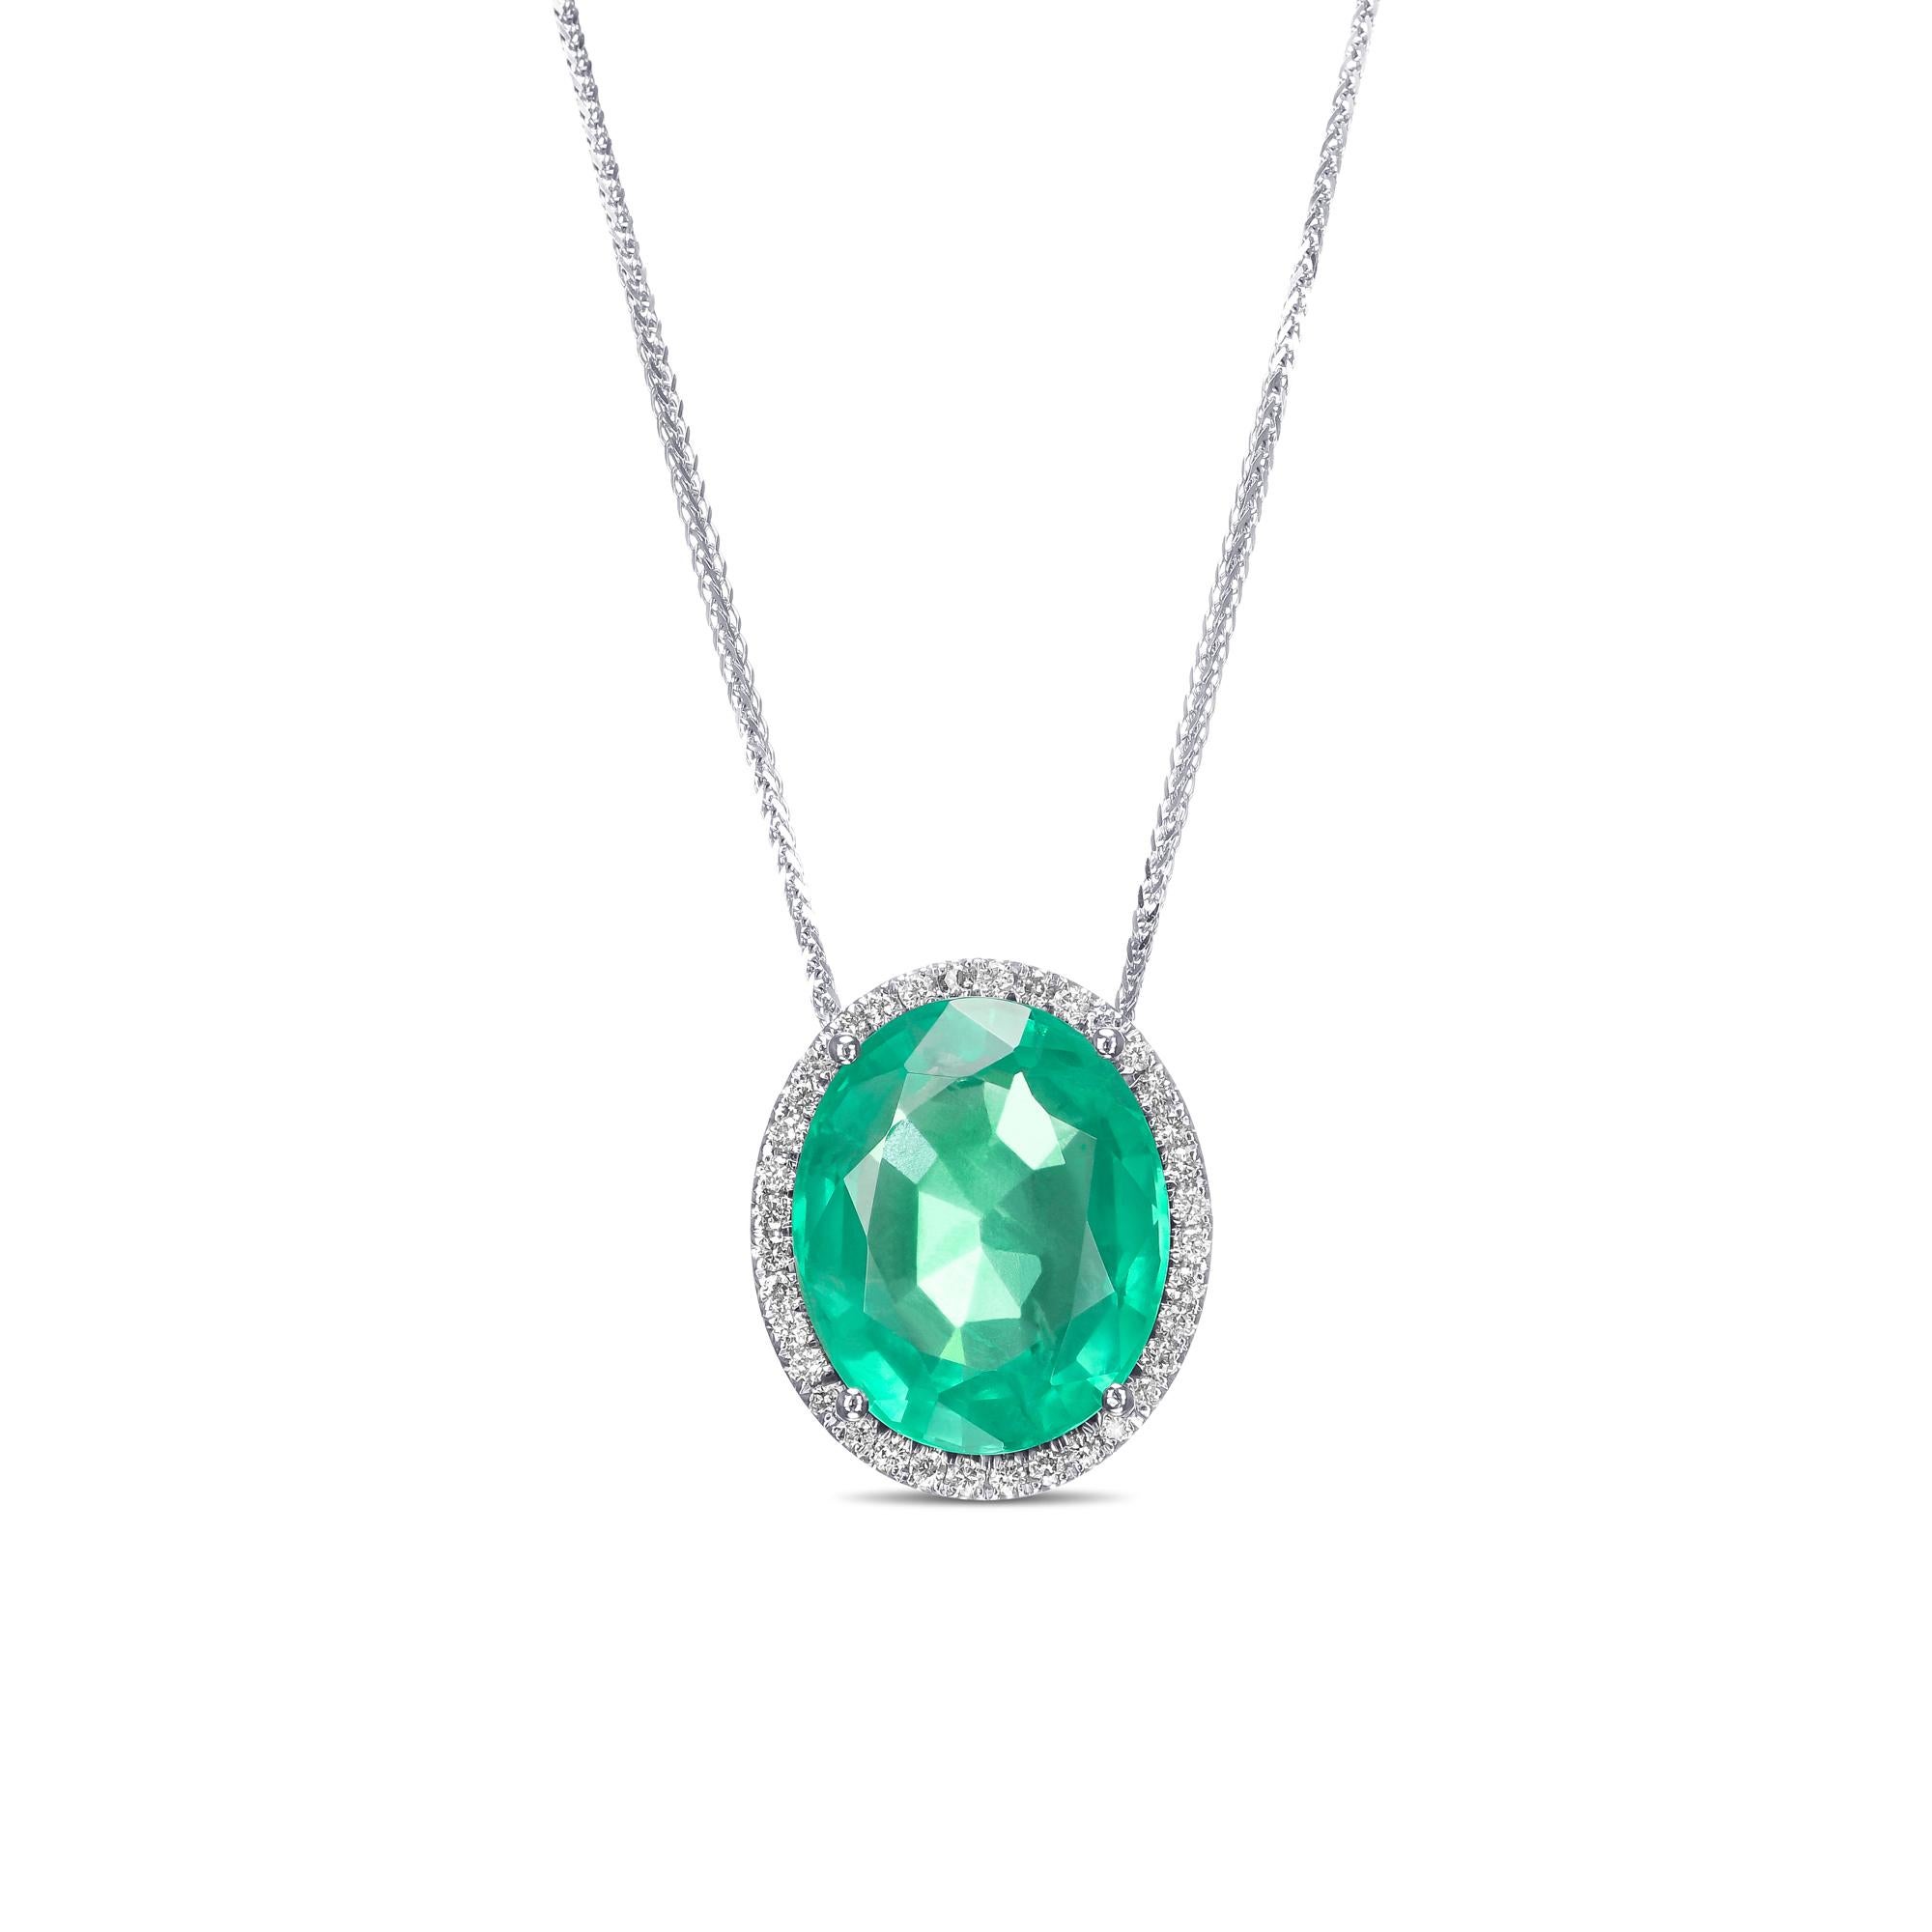 Oval Cut NO RESERVE - 9.90ct Emerald & 0.50cttw Diamonds, 14K White Gold Necklace